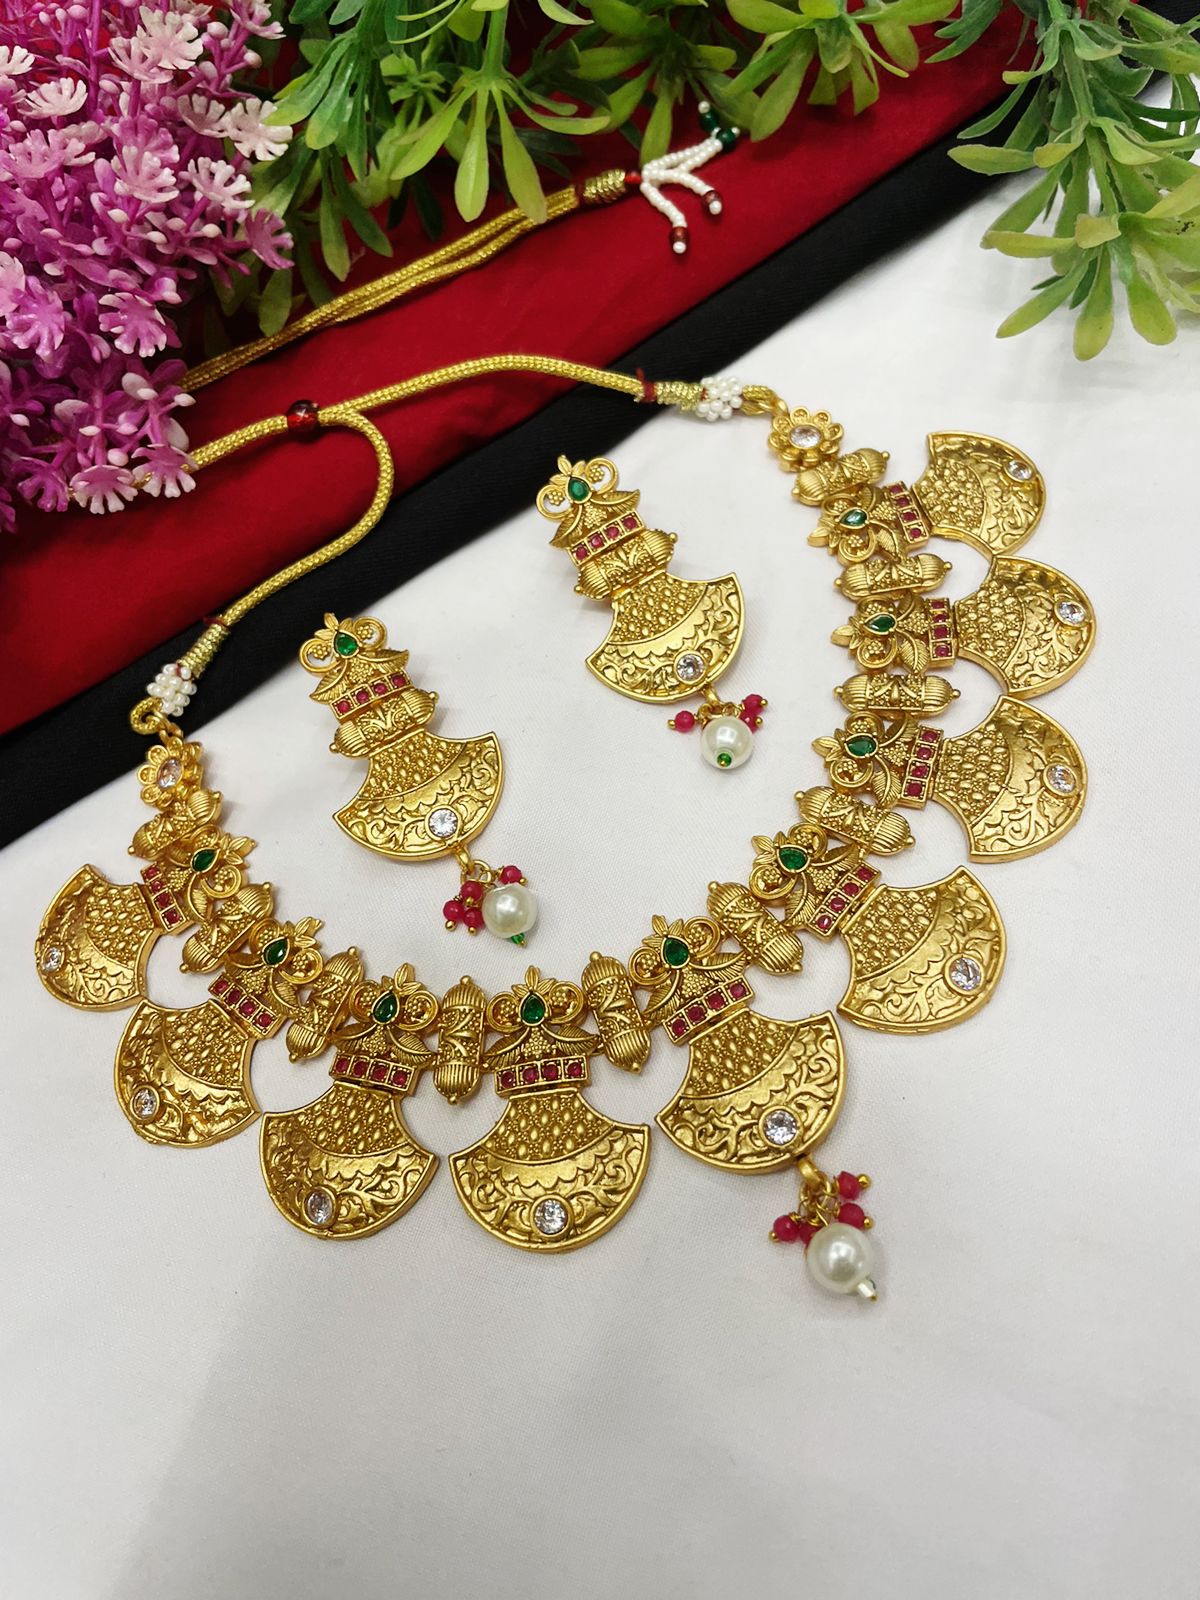 Rajwadi Gold Plated Necklaces That Make a Statement